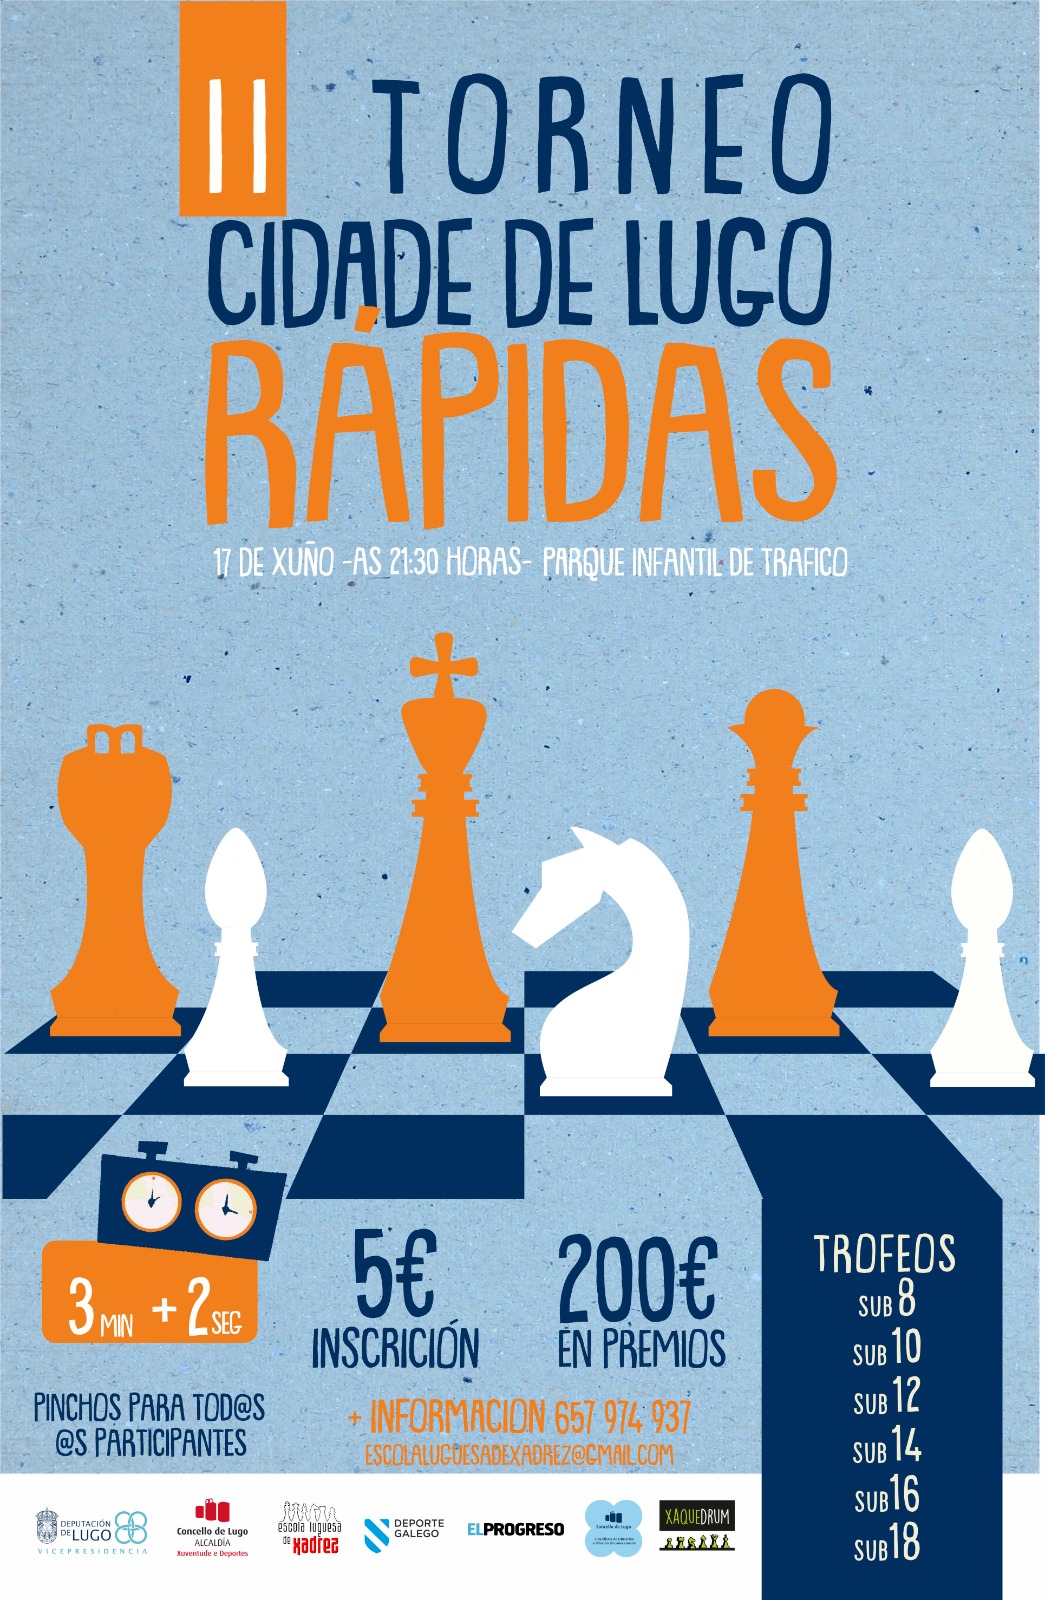 II Torneo Cidade de Lugo de Rápidas